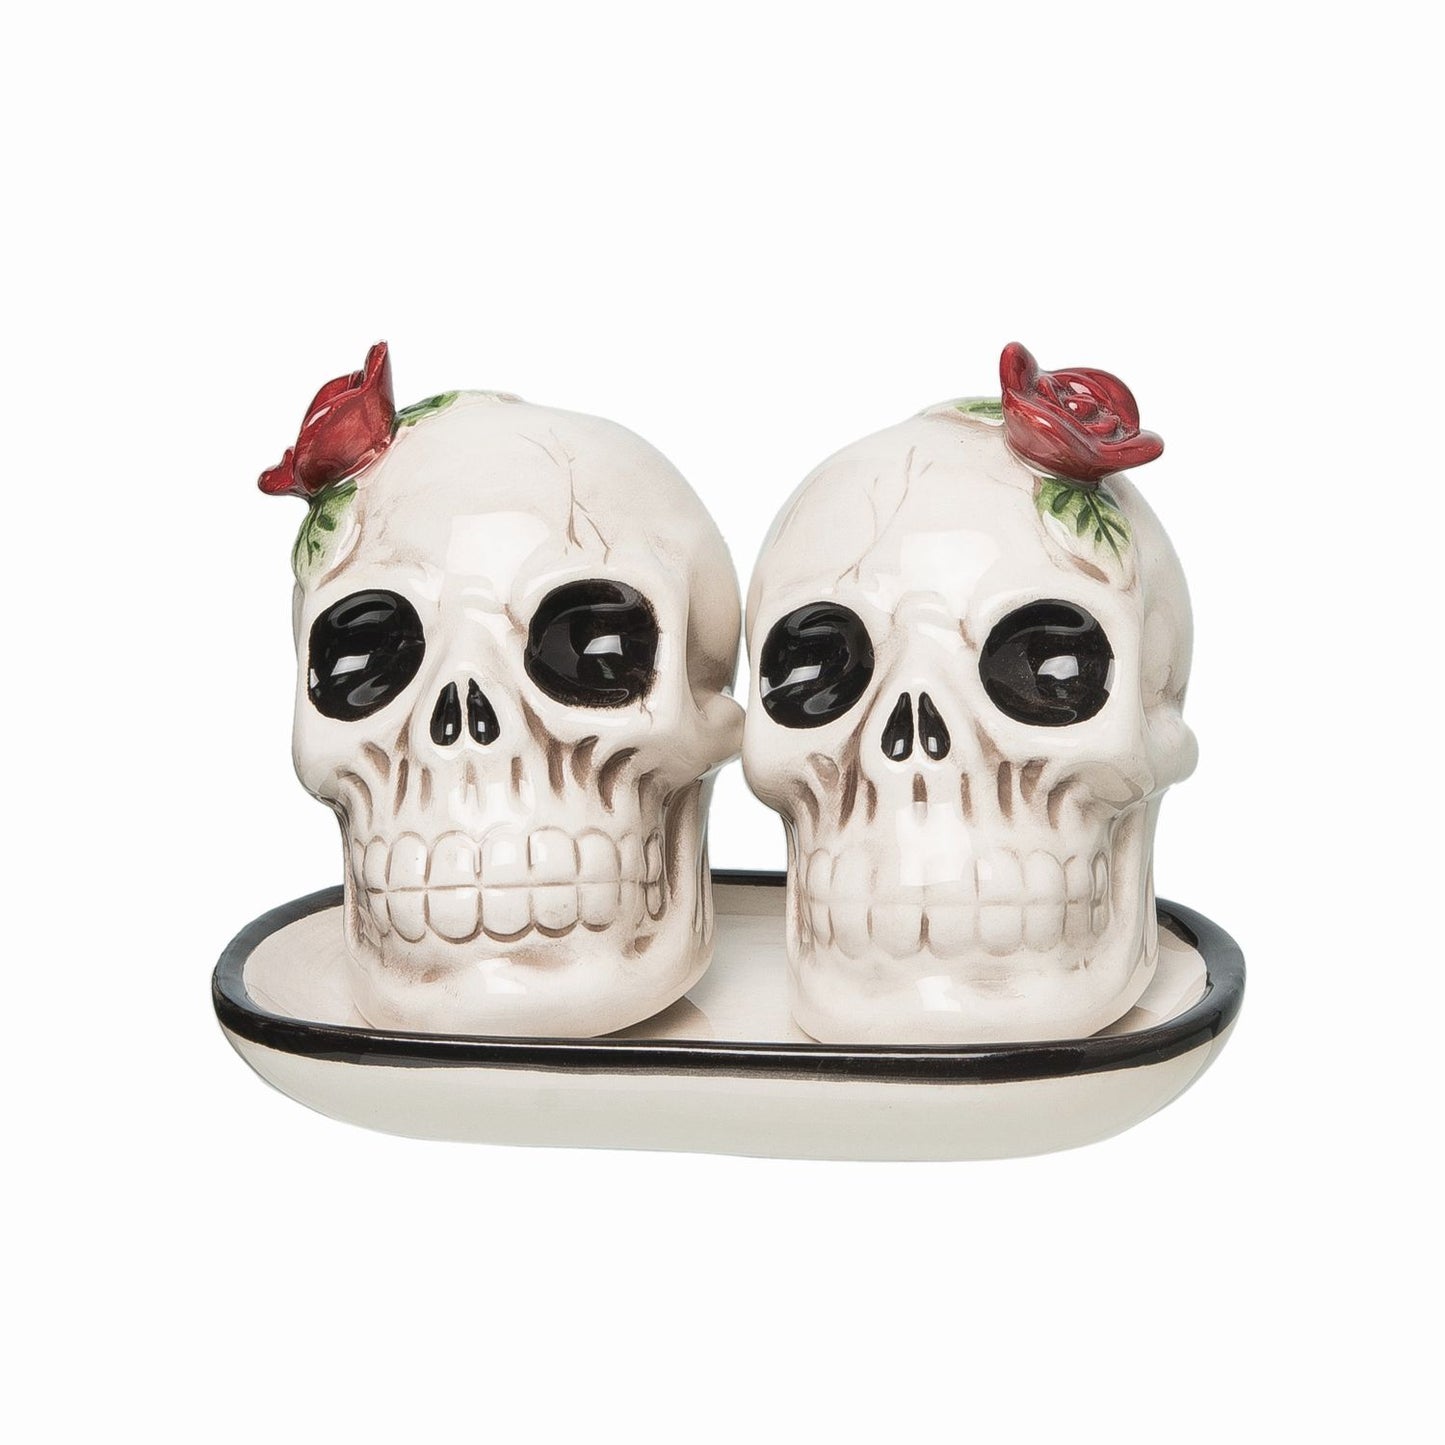 Transpac Ceramic Flower Skull Salt & Pepper Shakers With Tray, Set Of 3